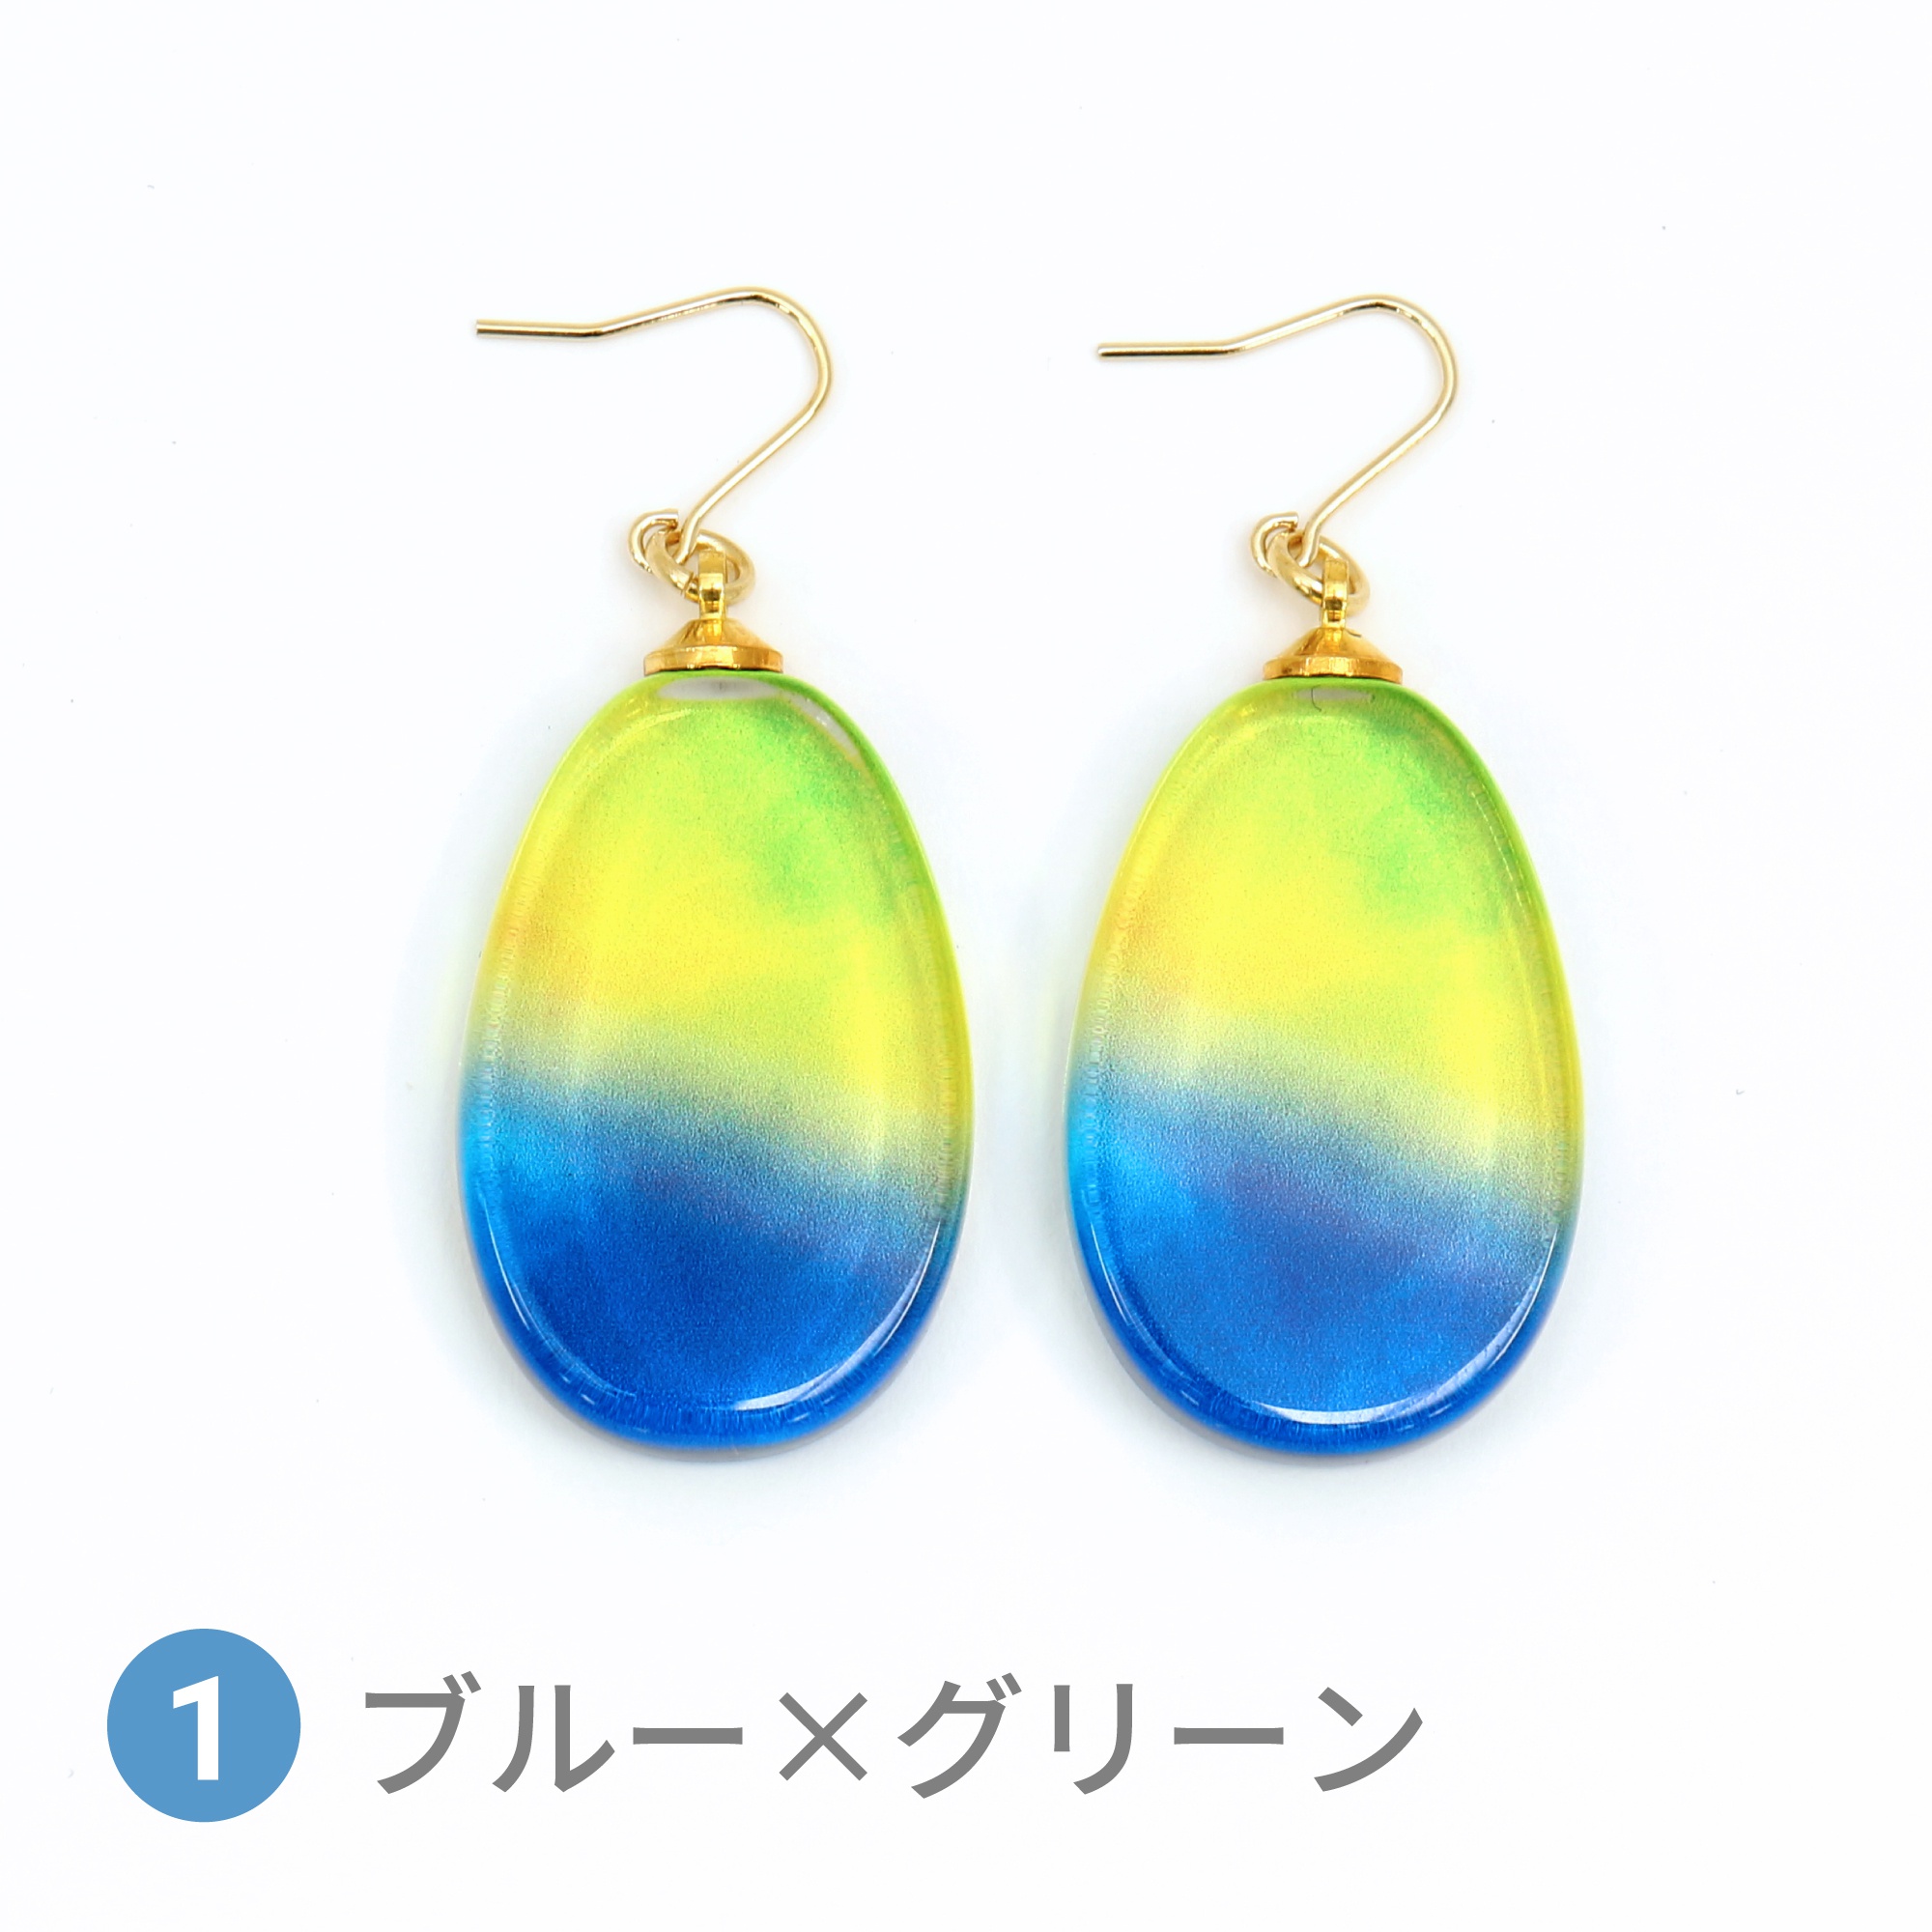 Glass accessories Pierced Earring AURORA blue & green drop shape